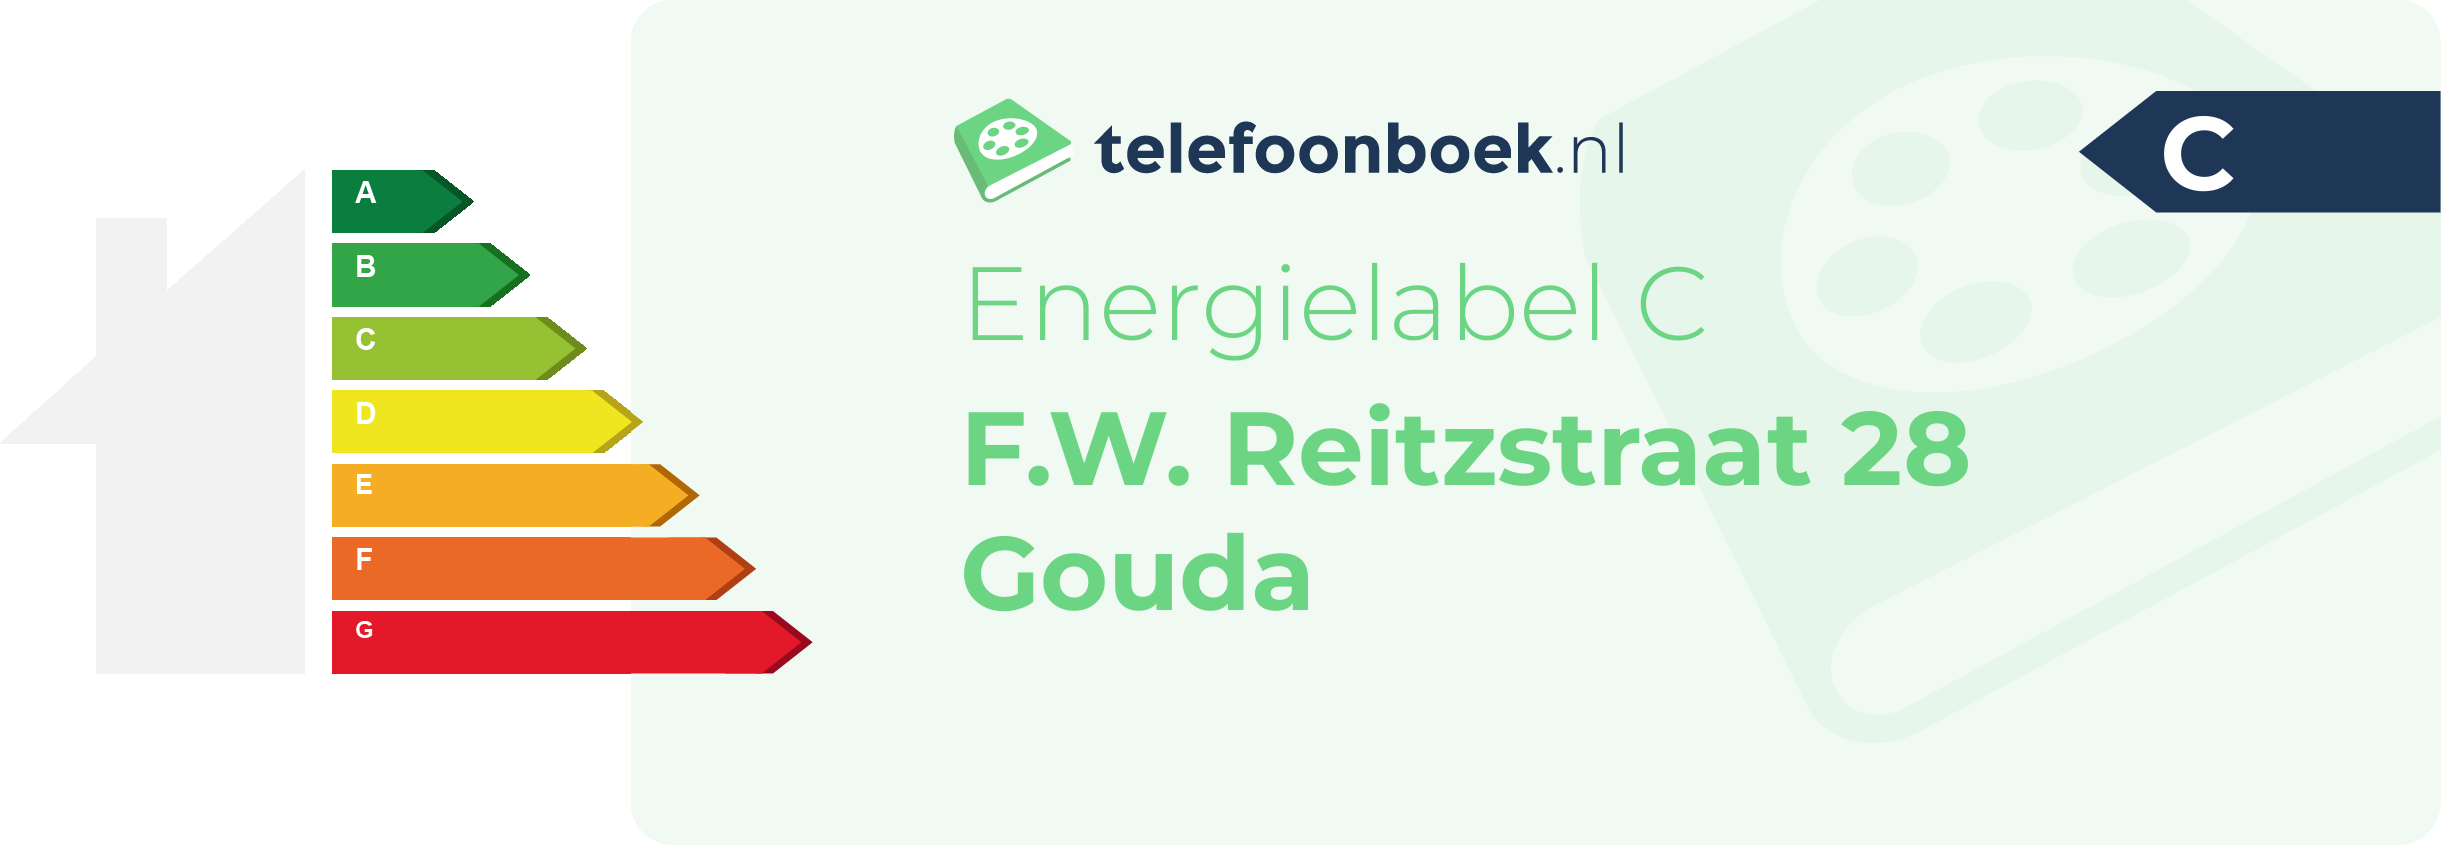 Energielabel F.W. Reitzstraat 28 Gouda